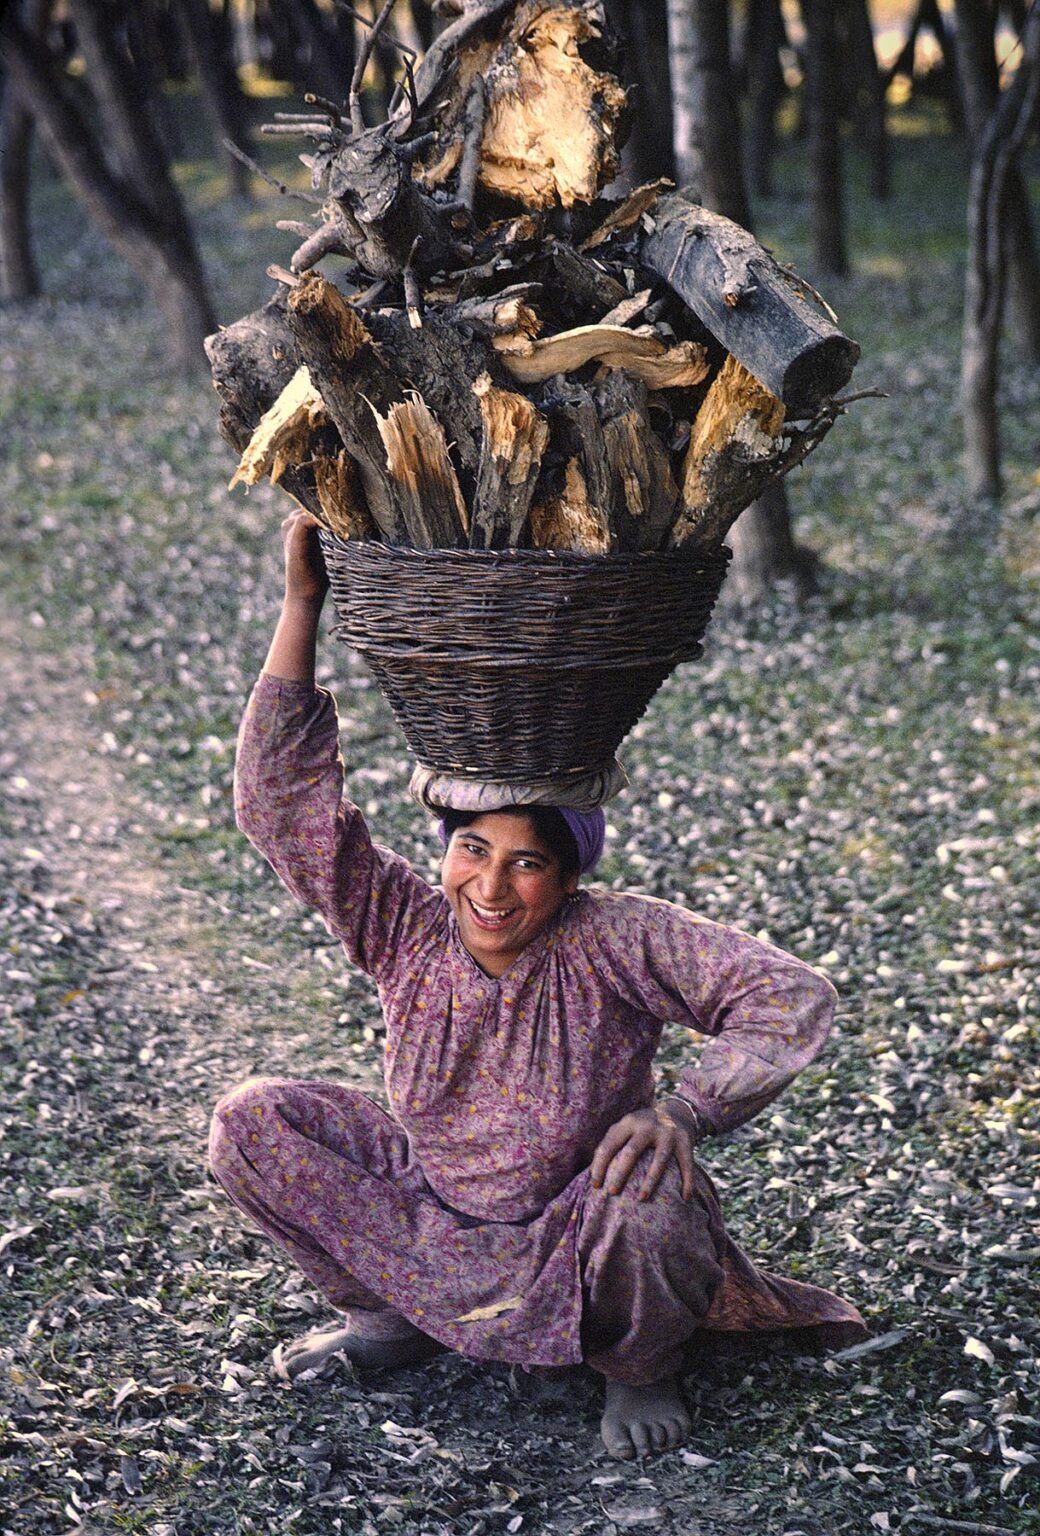 KASHMIRI WOMAN carries a BASKET of FIRE WOOD on her head - KASHMIR, INDIA